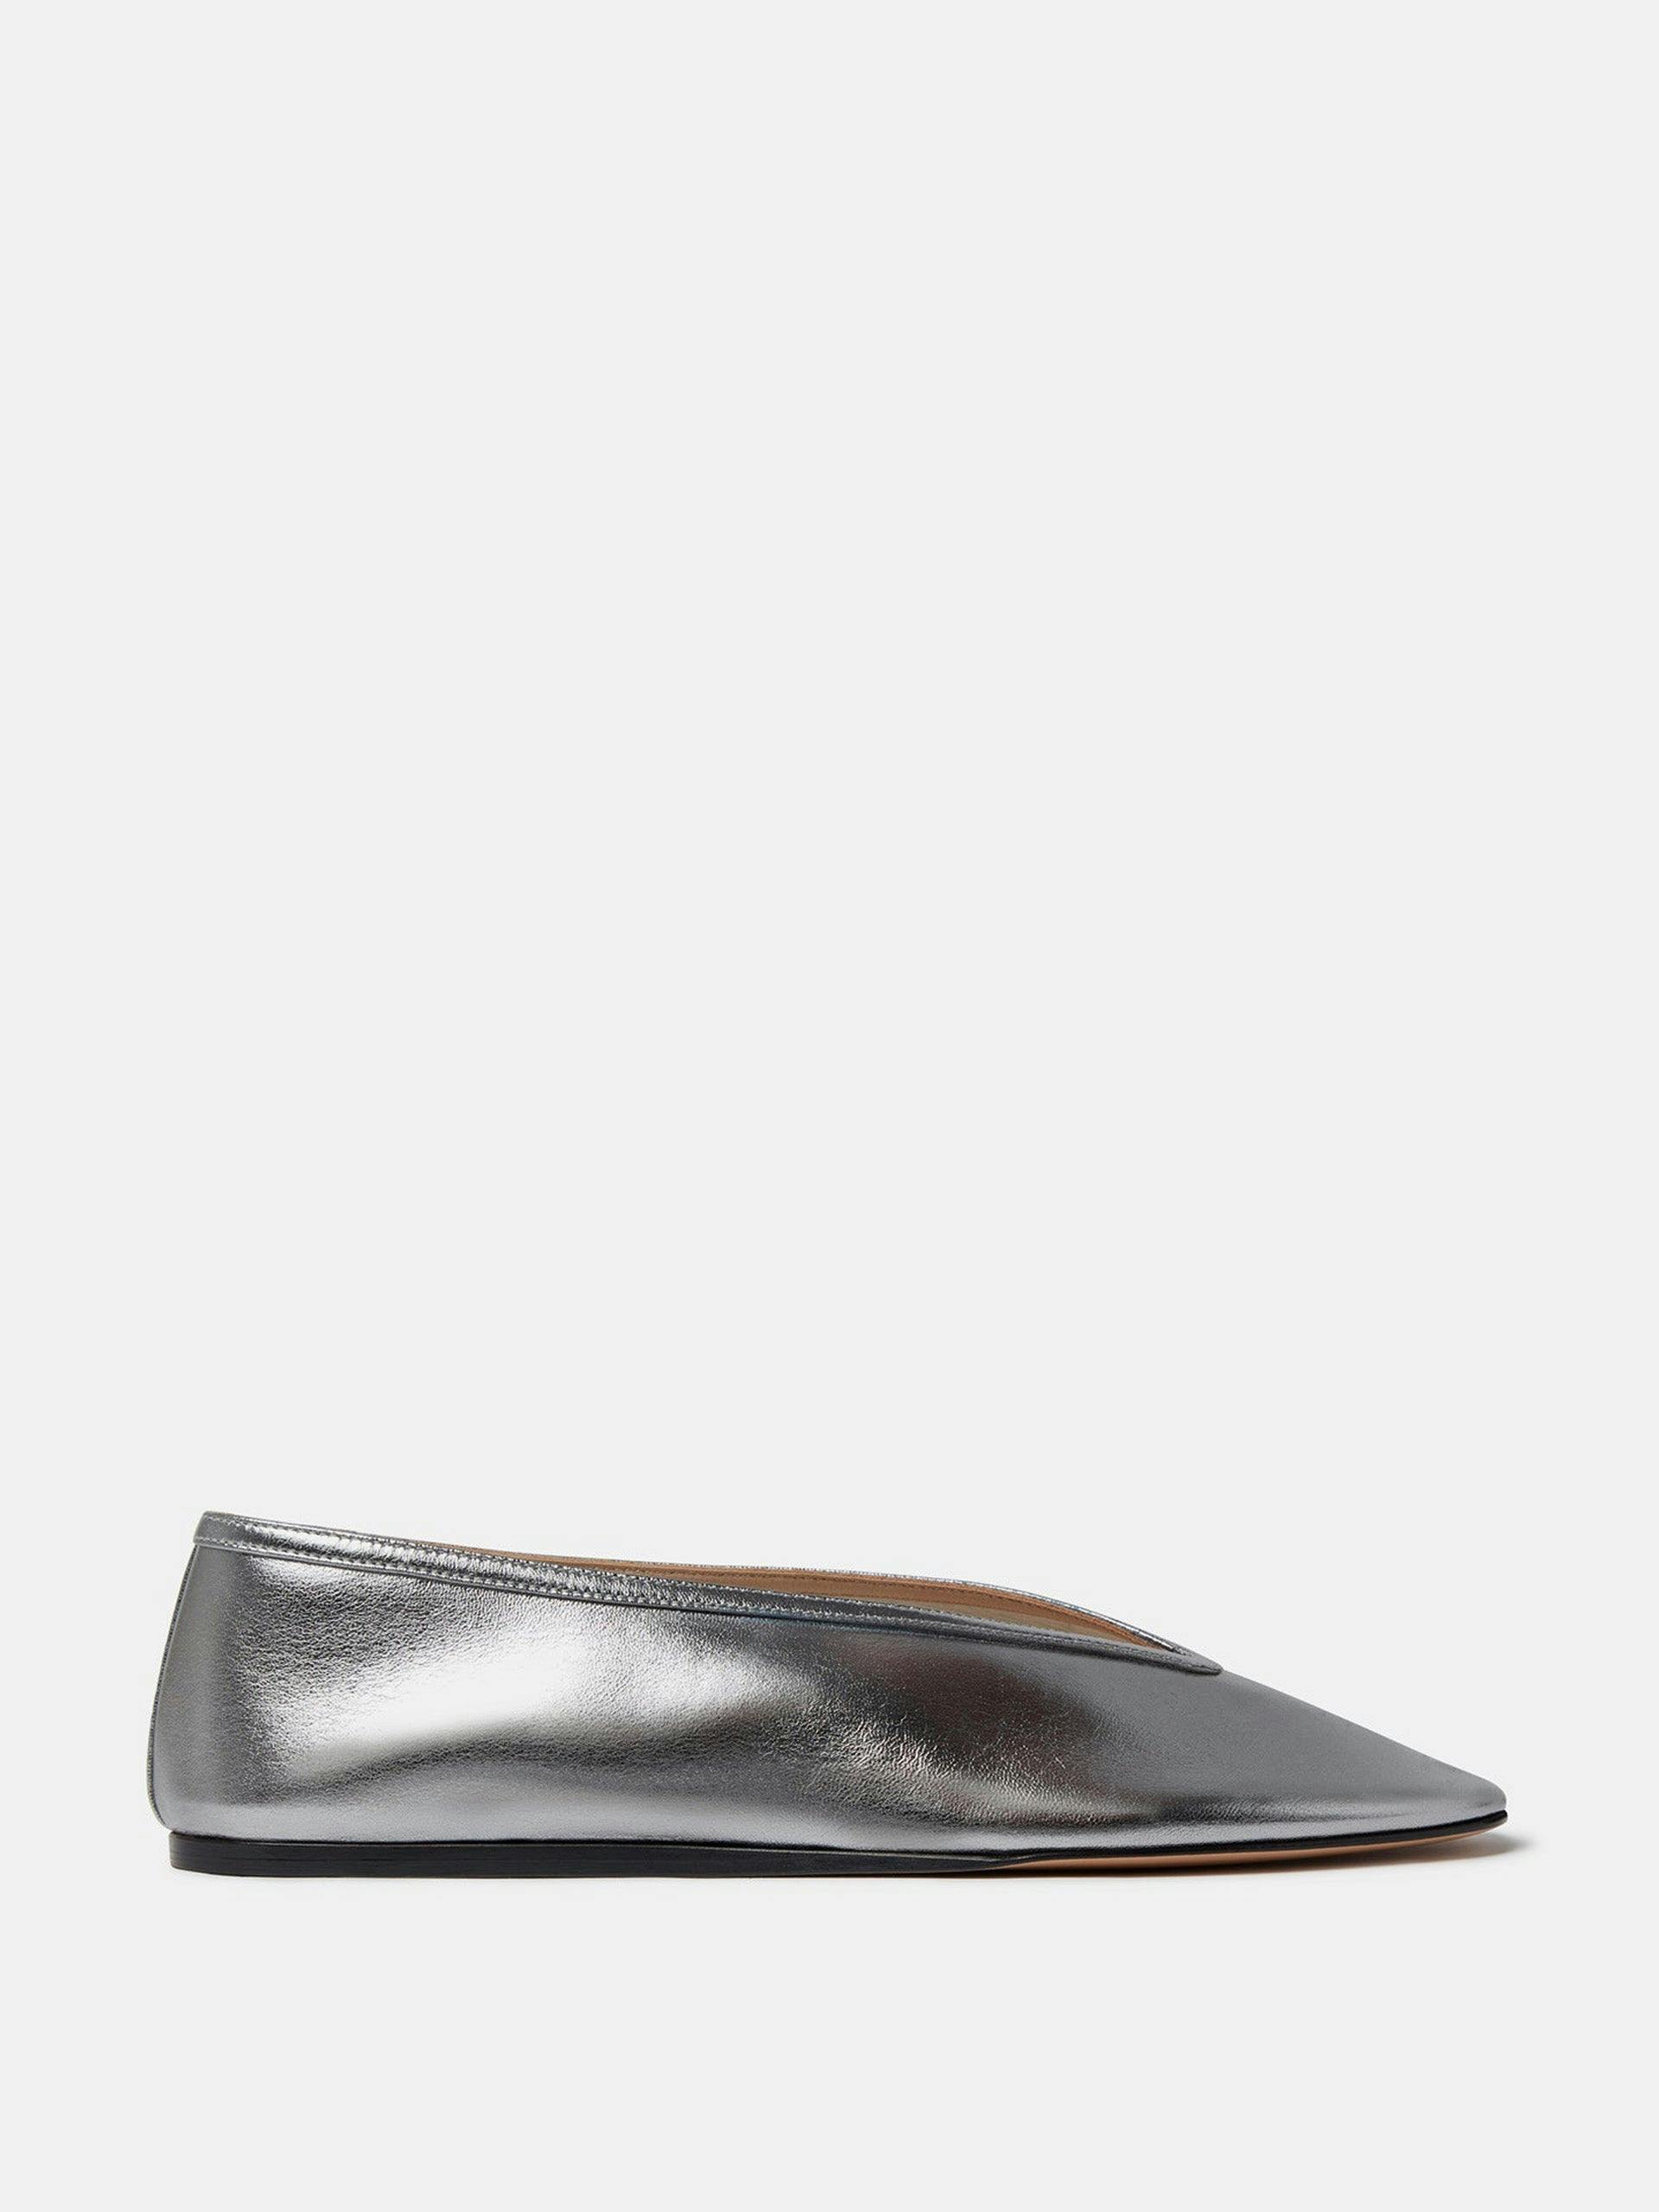 Silver leather Luna slipper flats